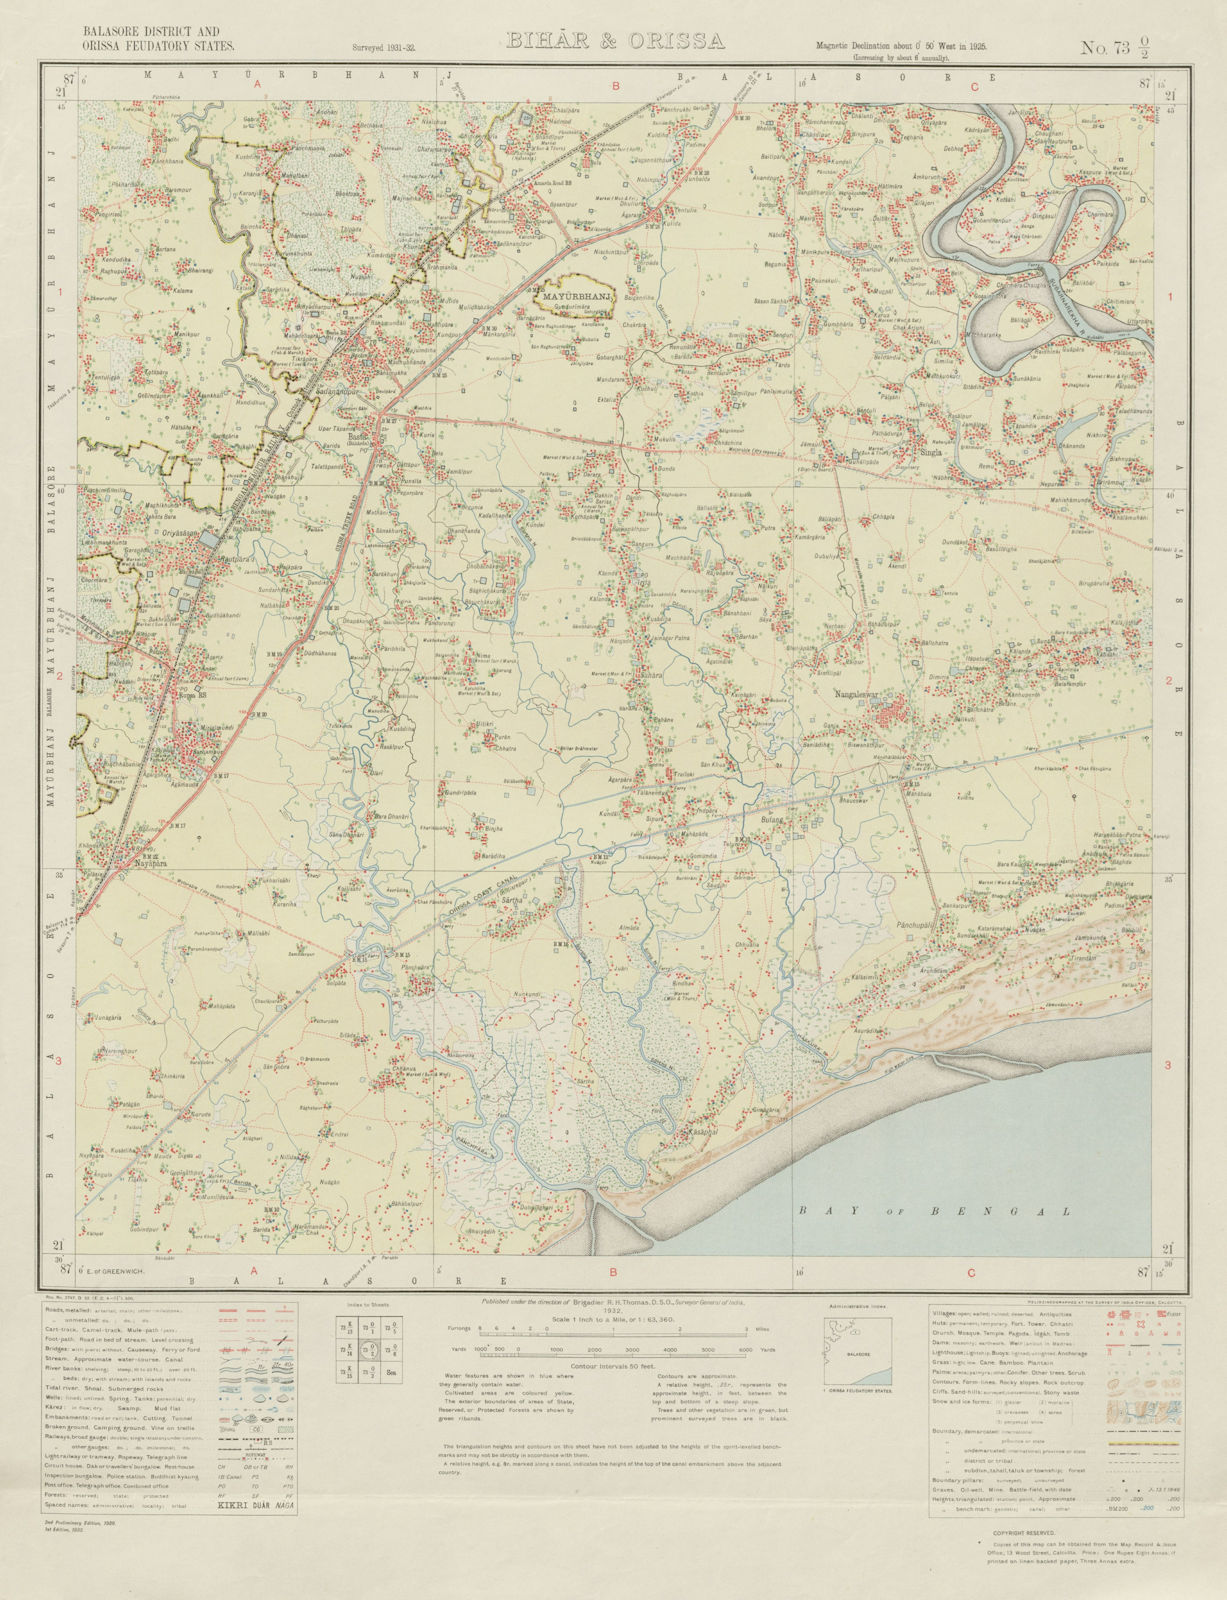 SURVEY OF INDIA 73 O/2 Odisha Kasafal Sartha Khandahar Bolanga Basta 1932 map